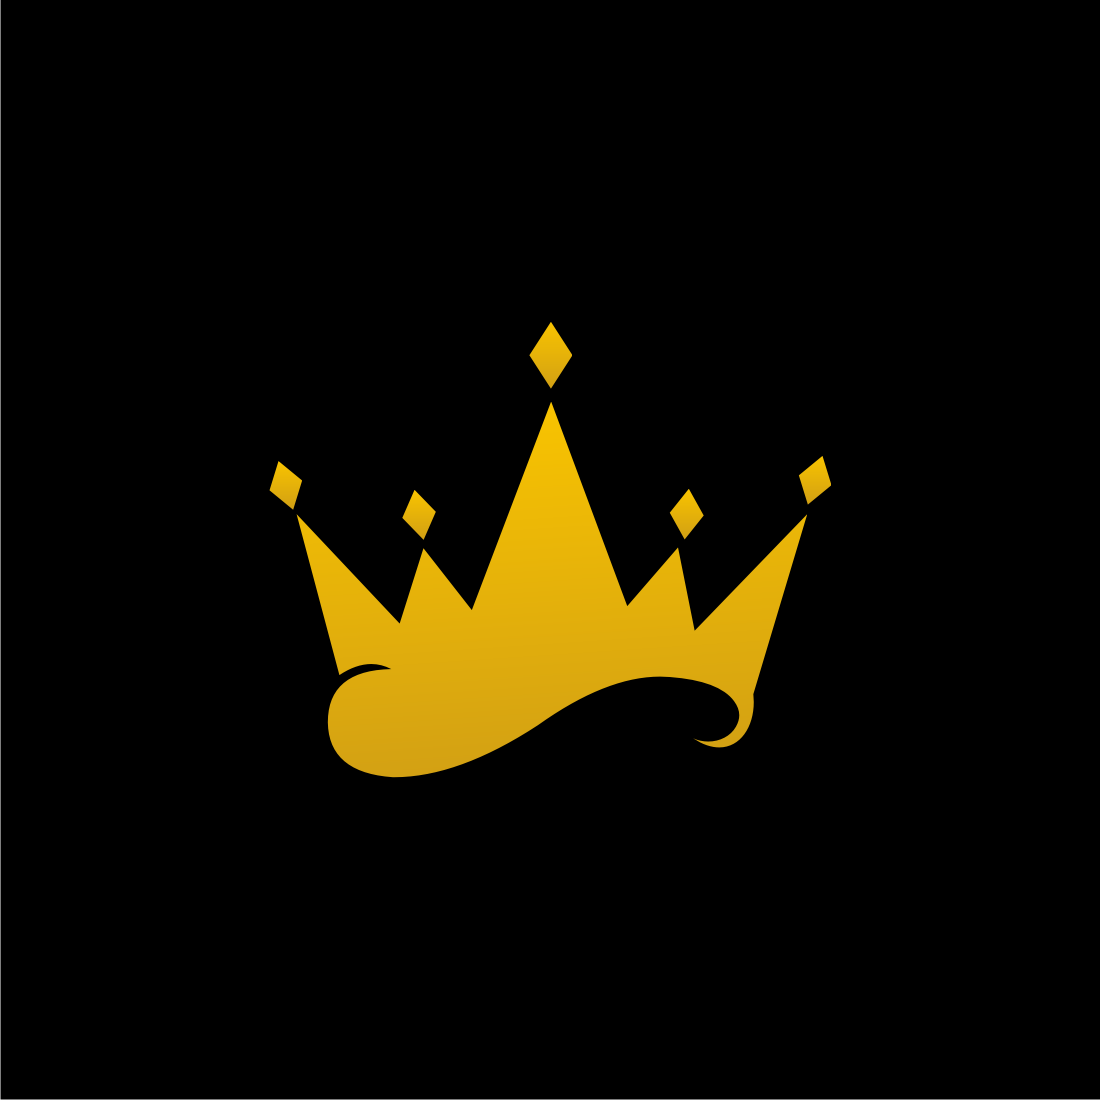 King 3d gold golden text metal logo icon design Vector Image